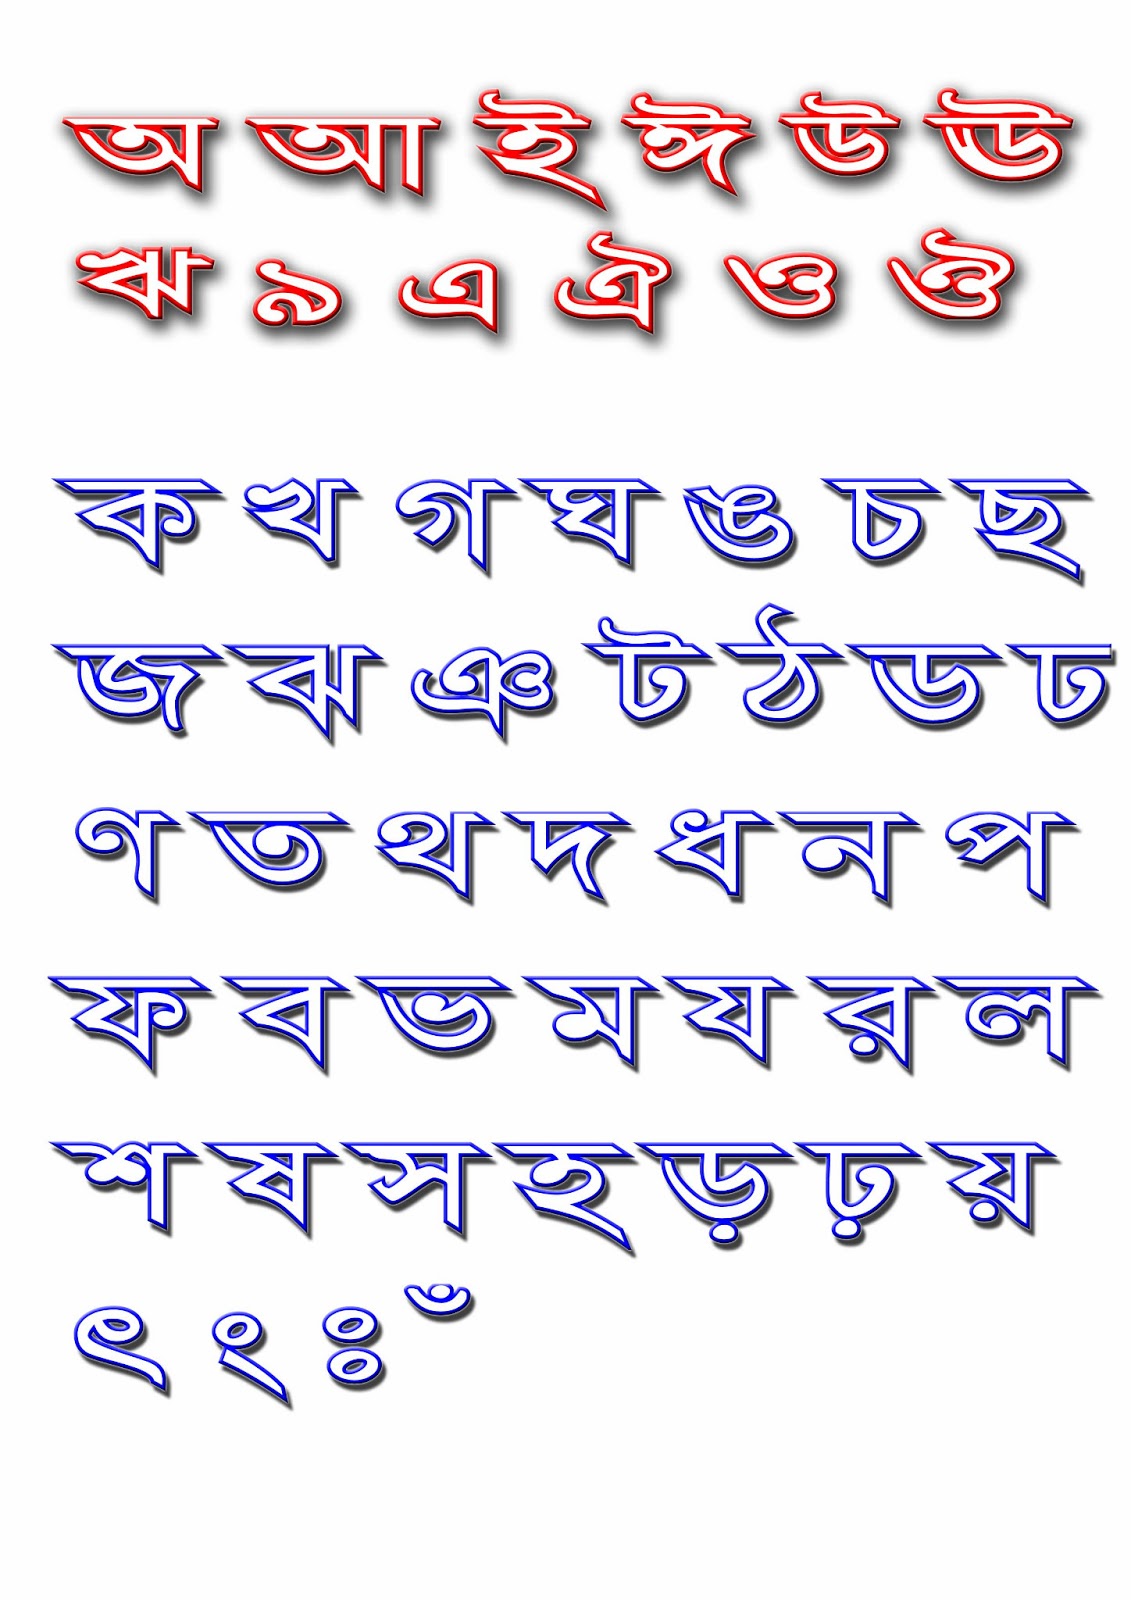 bengali to english alphabet